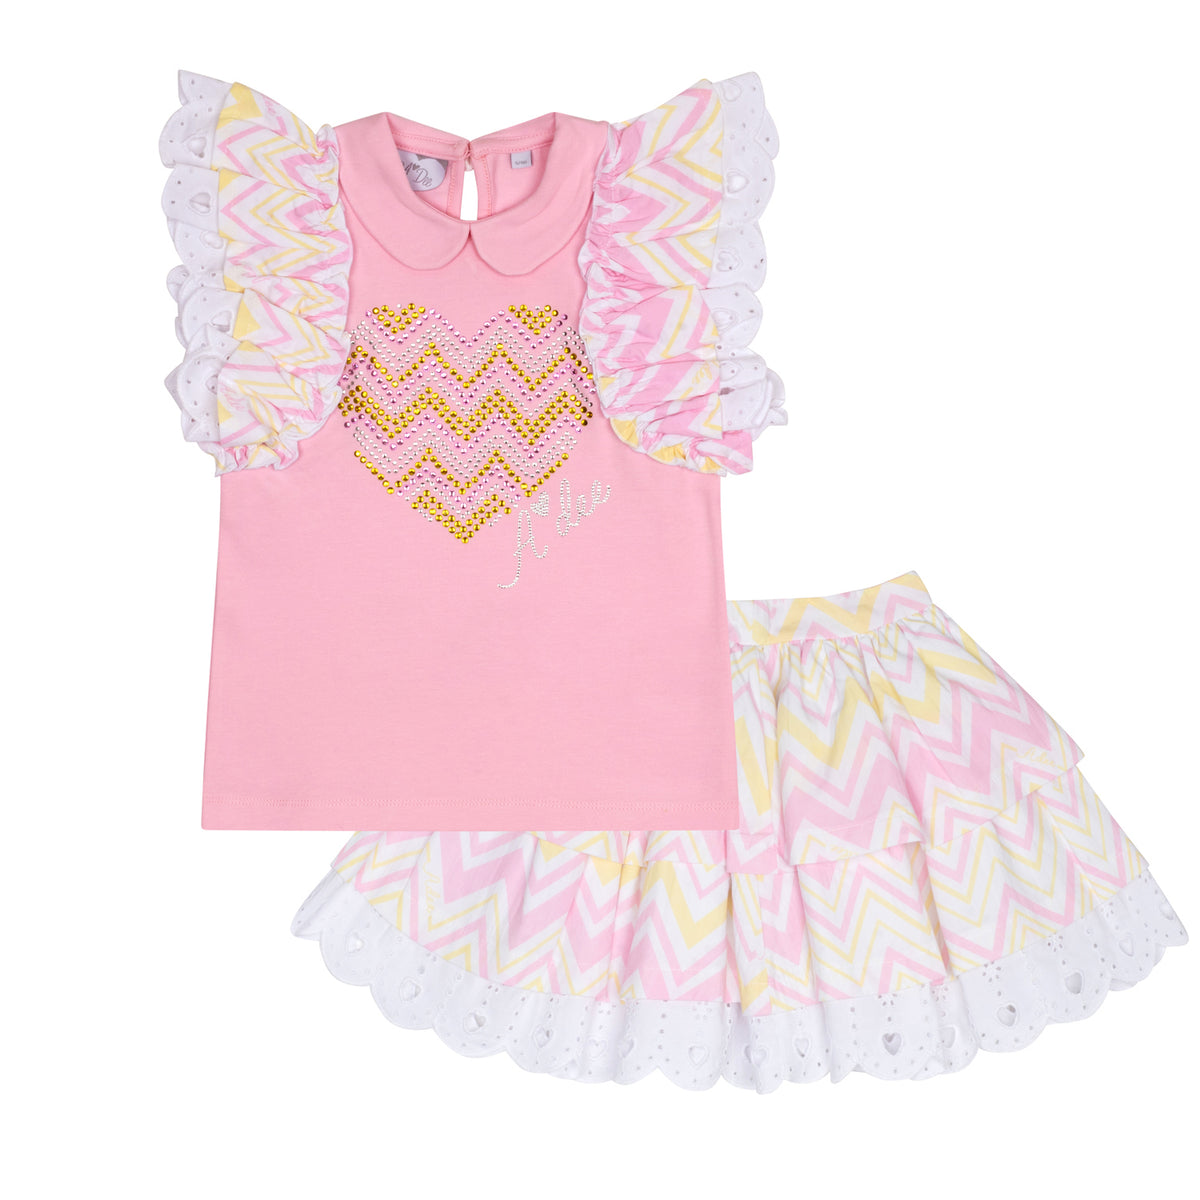 A Dee Girls 'Leanne' Pink Chevron Print Skirt Set